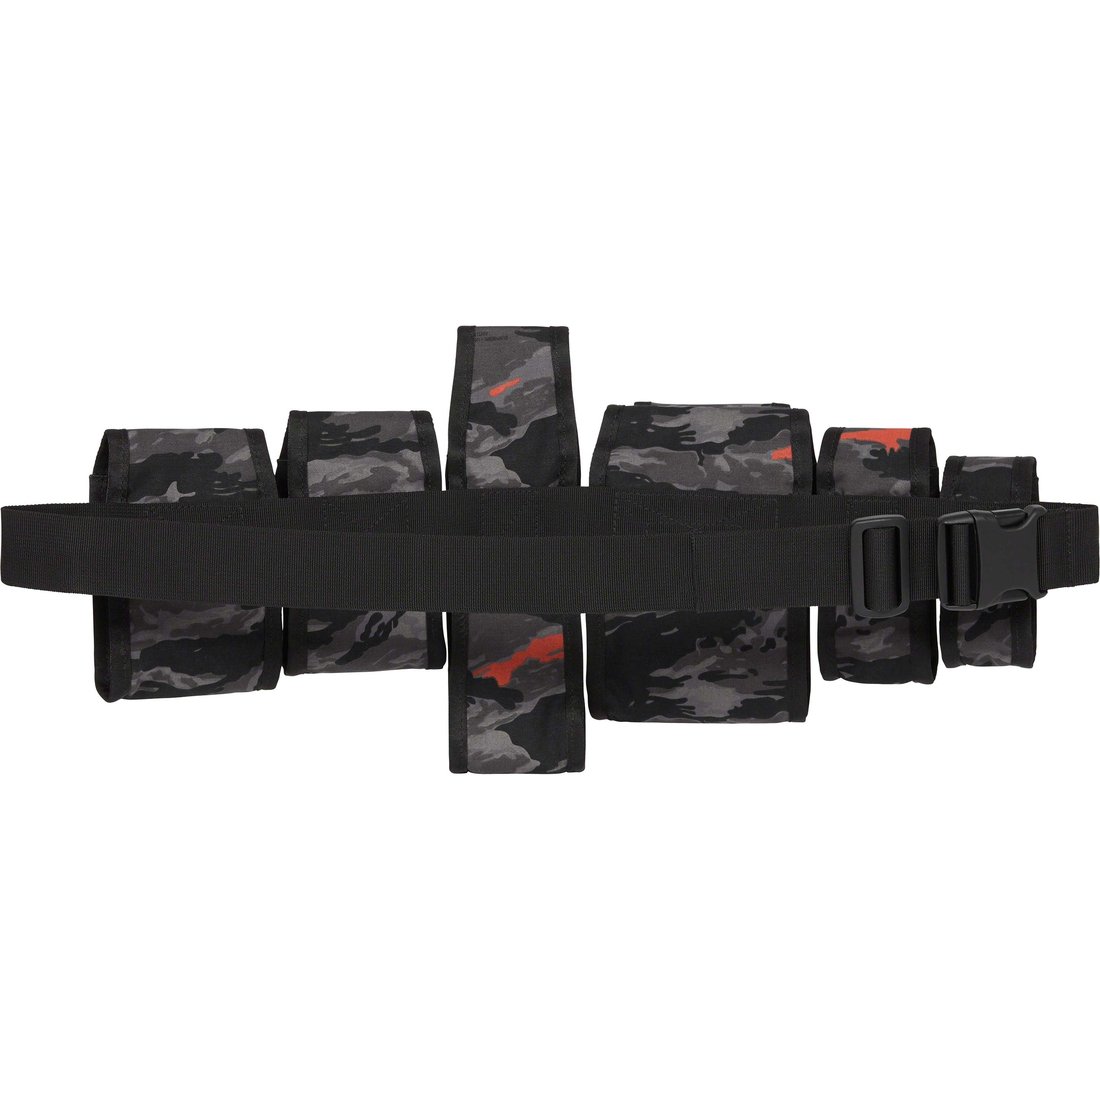 Details on Supreme UNDERCOVER Belt Waist Bag Black Camo from spring summer
                                                    2023 (Price is $138)